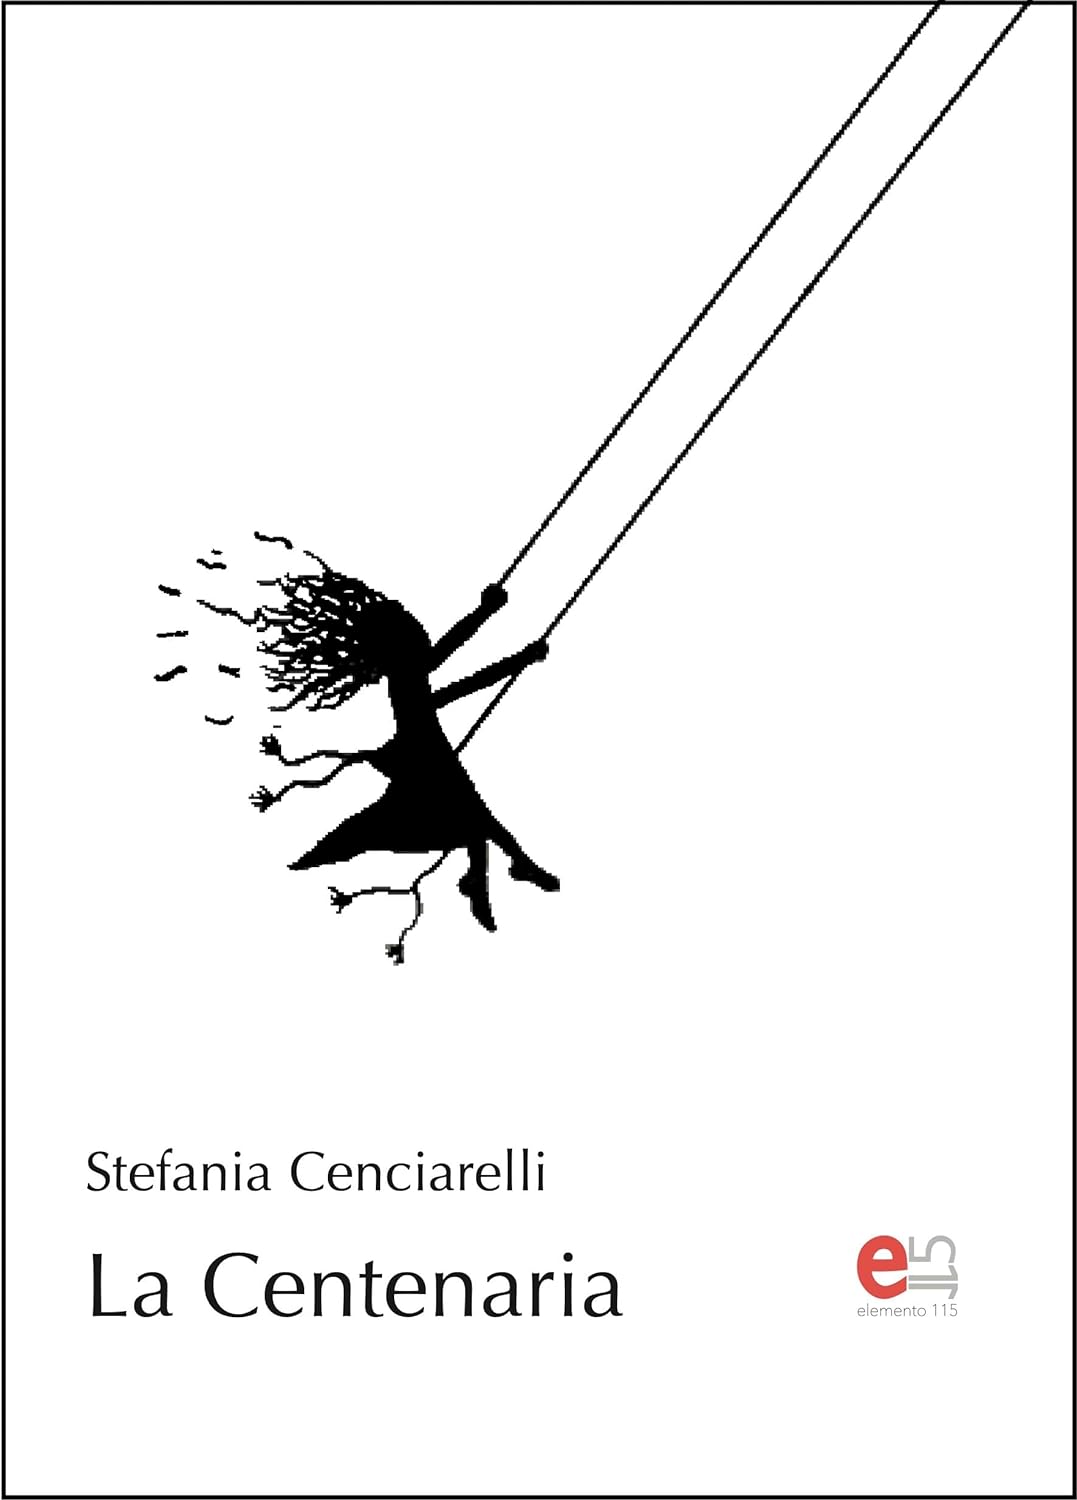 Stefania Cenciarelli – La Centenaria